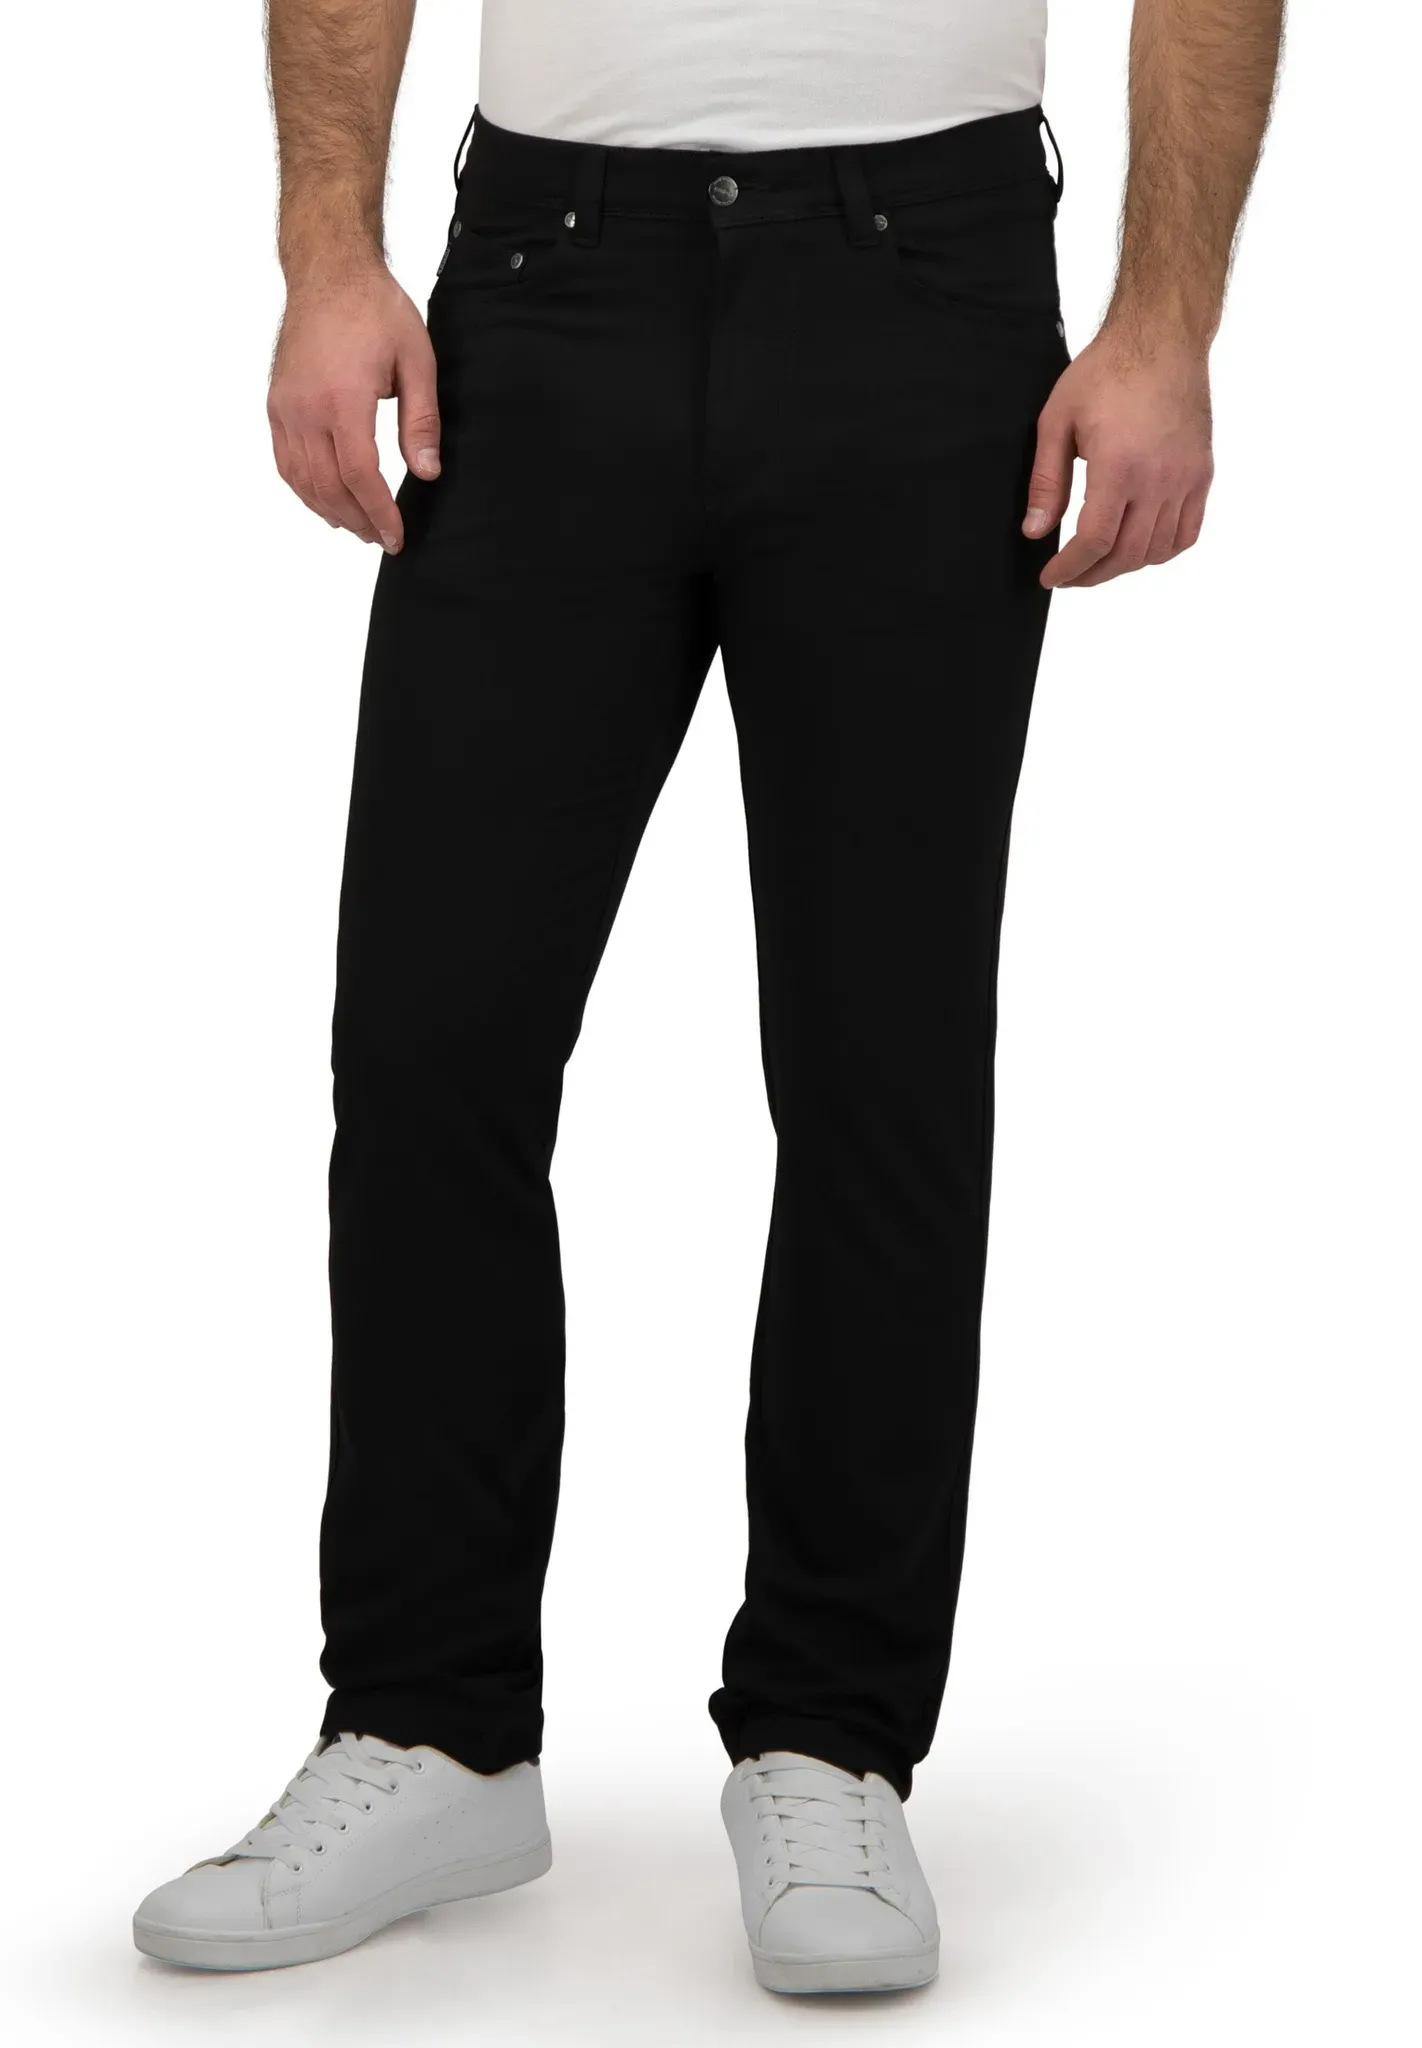 Bequeme Jeans BRÜHL "Genua III 1" Gr. 34, EURO-Größen, schwarz Herren Jeans 5-Pocket-Jeans Straight-fit-Jeans Stretchjeans Stretch